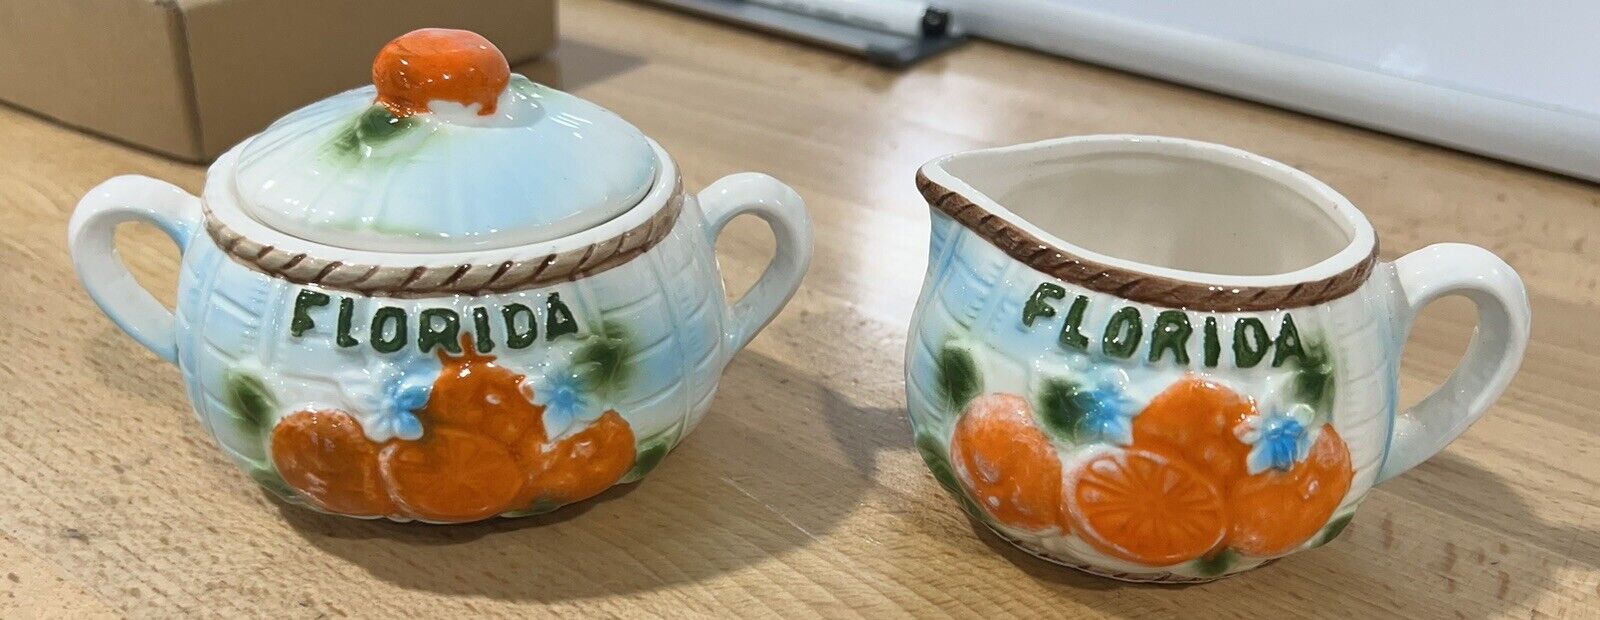 2 Vtg Florida Creamer Sugar Bowl Set Lot Souvenir Oranges 1960s 70s Japan Retro